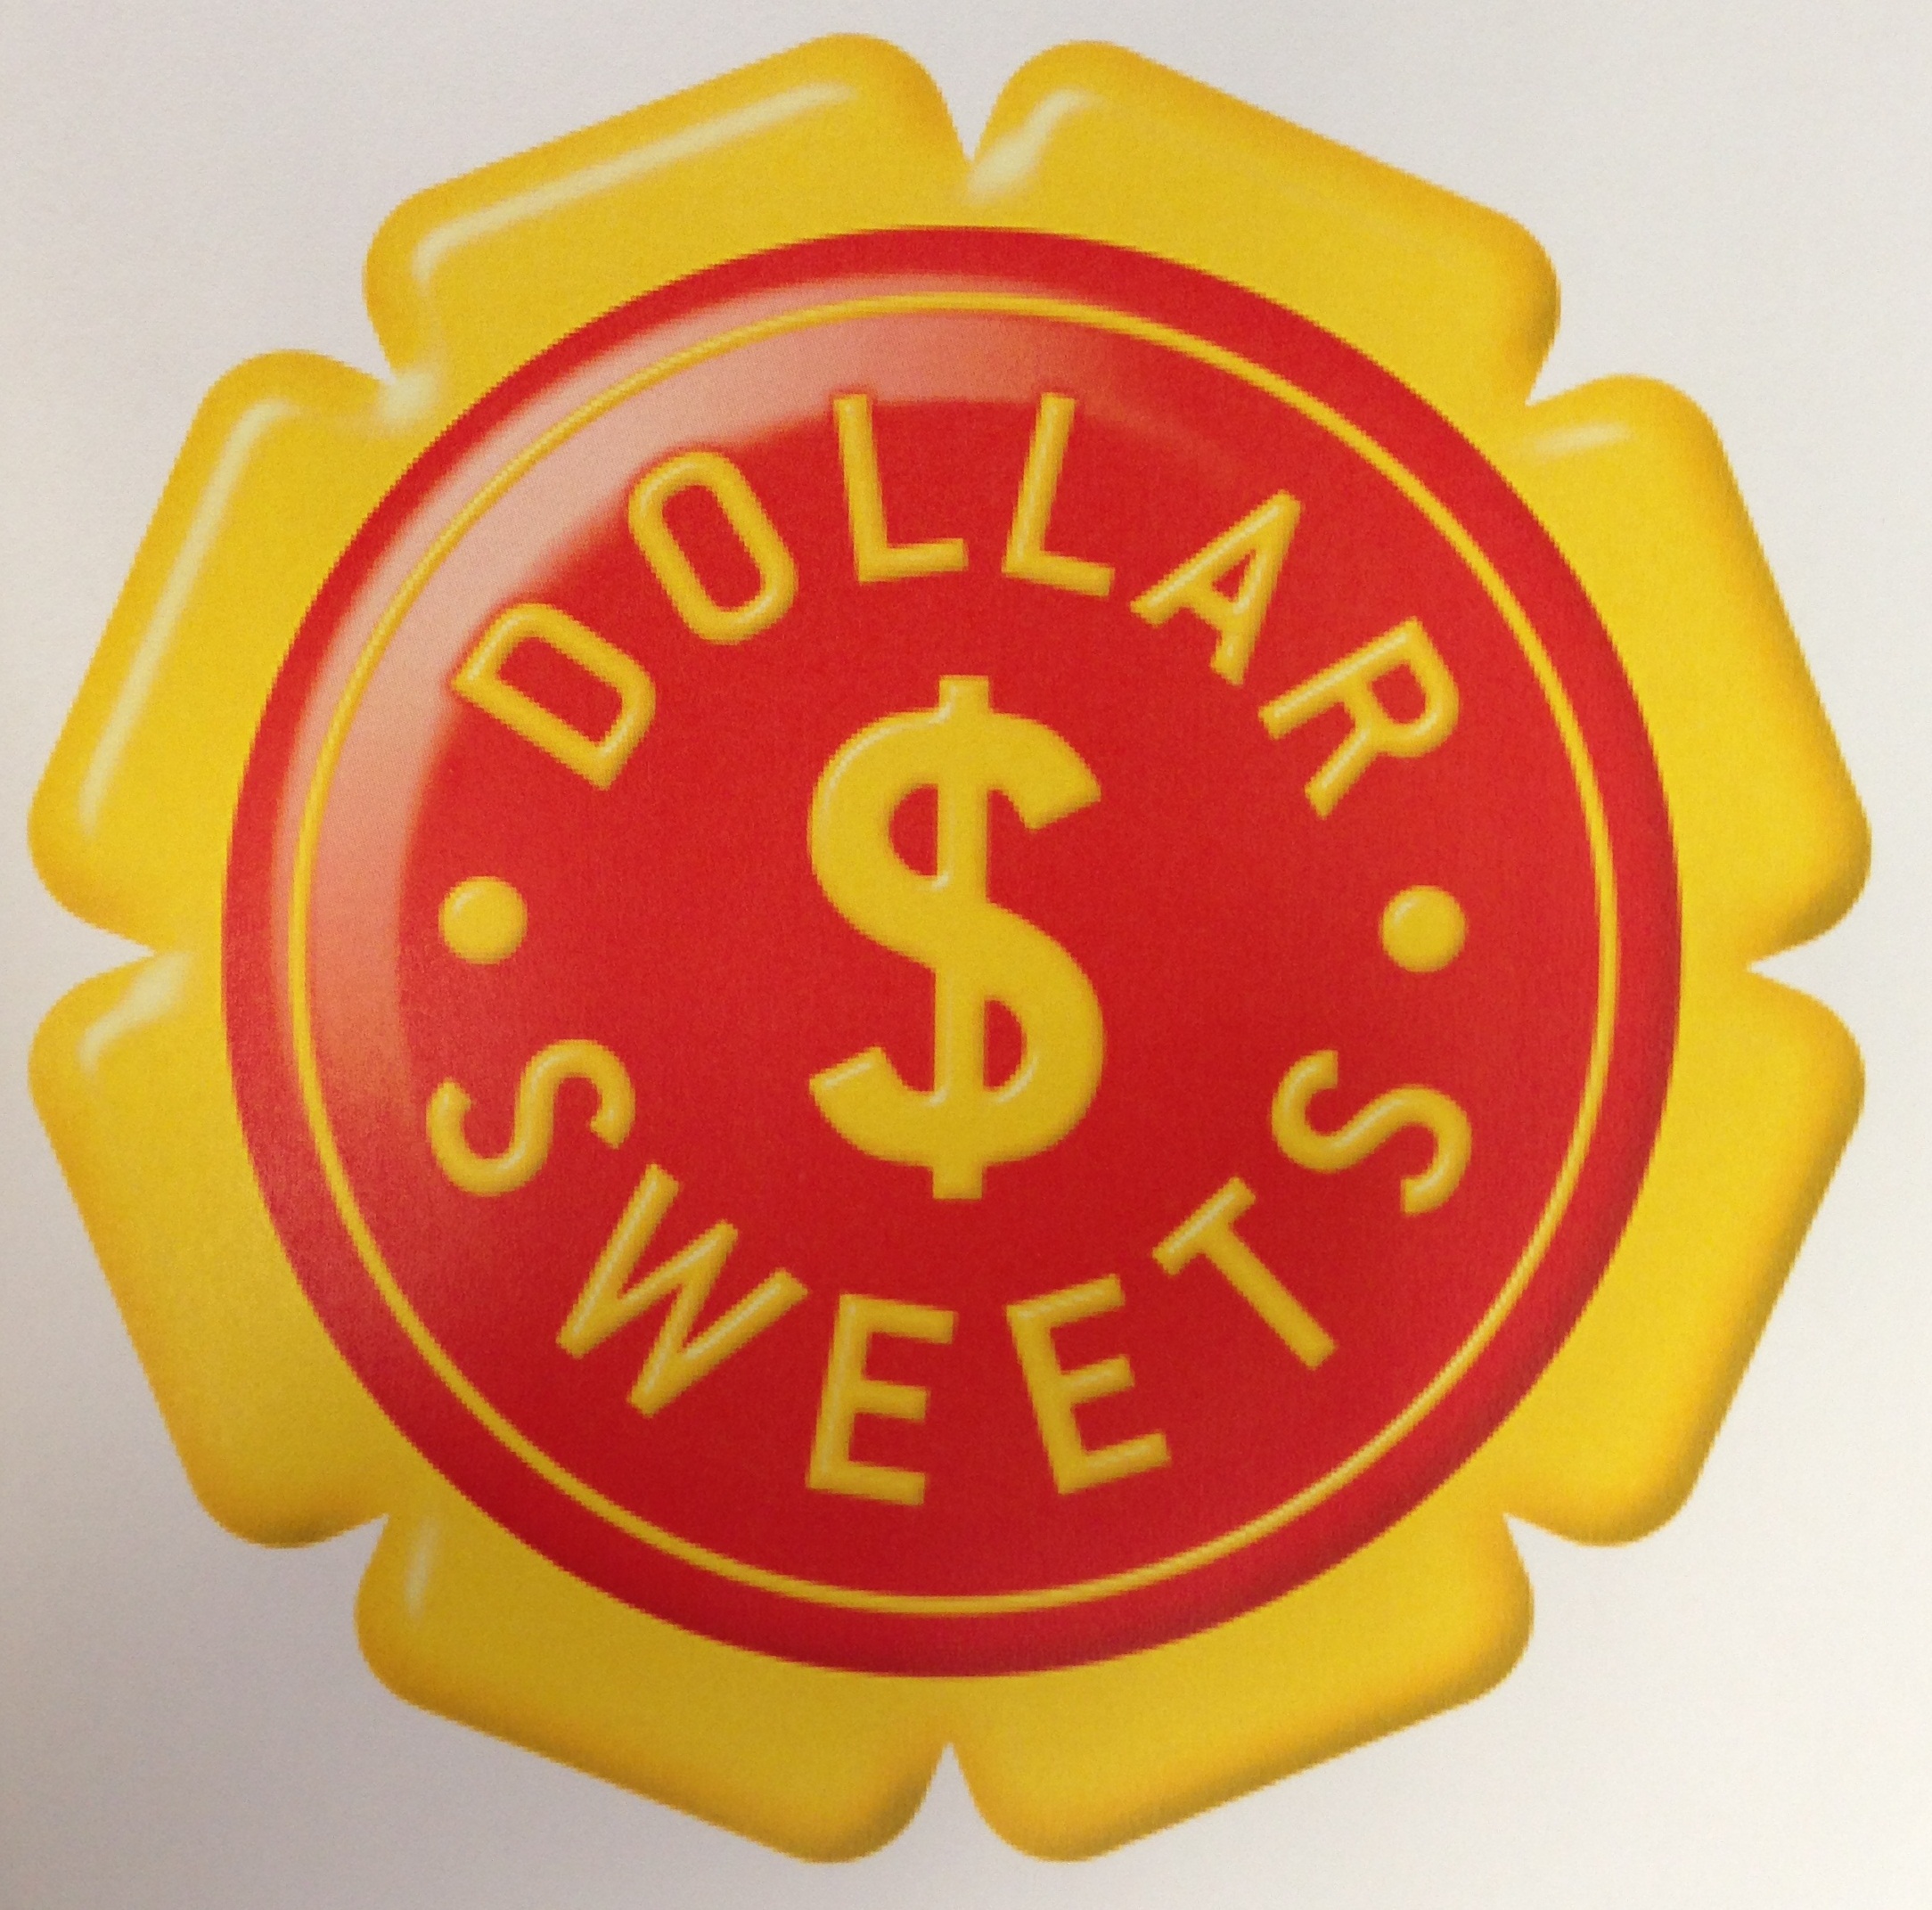 Dollar Sweets Company Pty Ltd